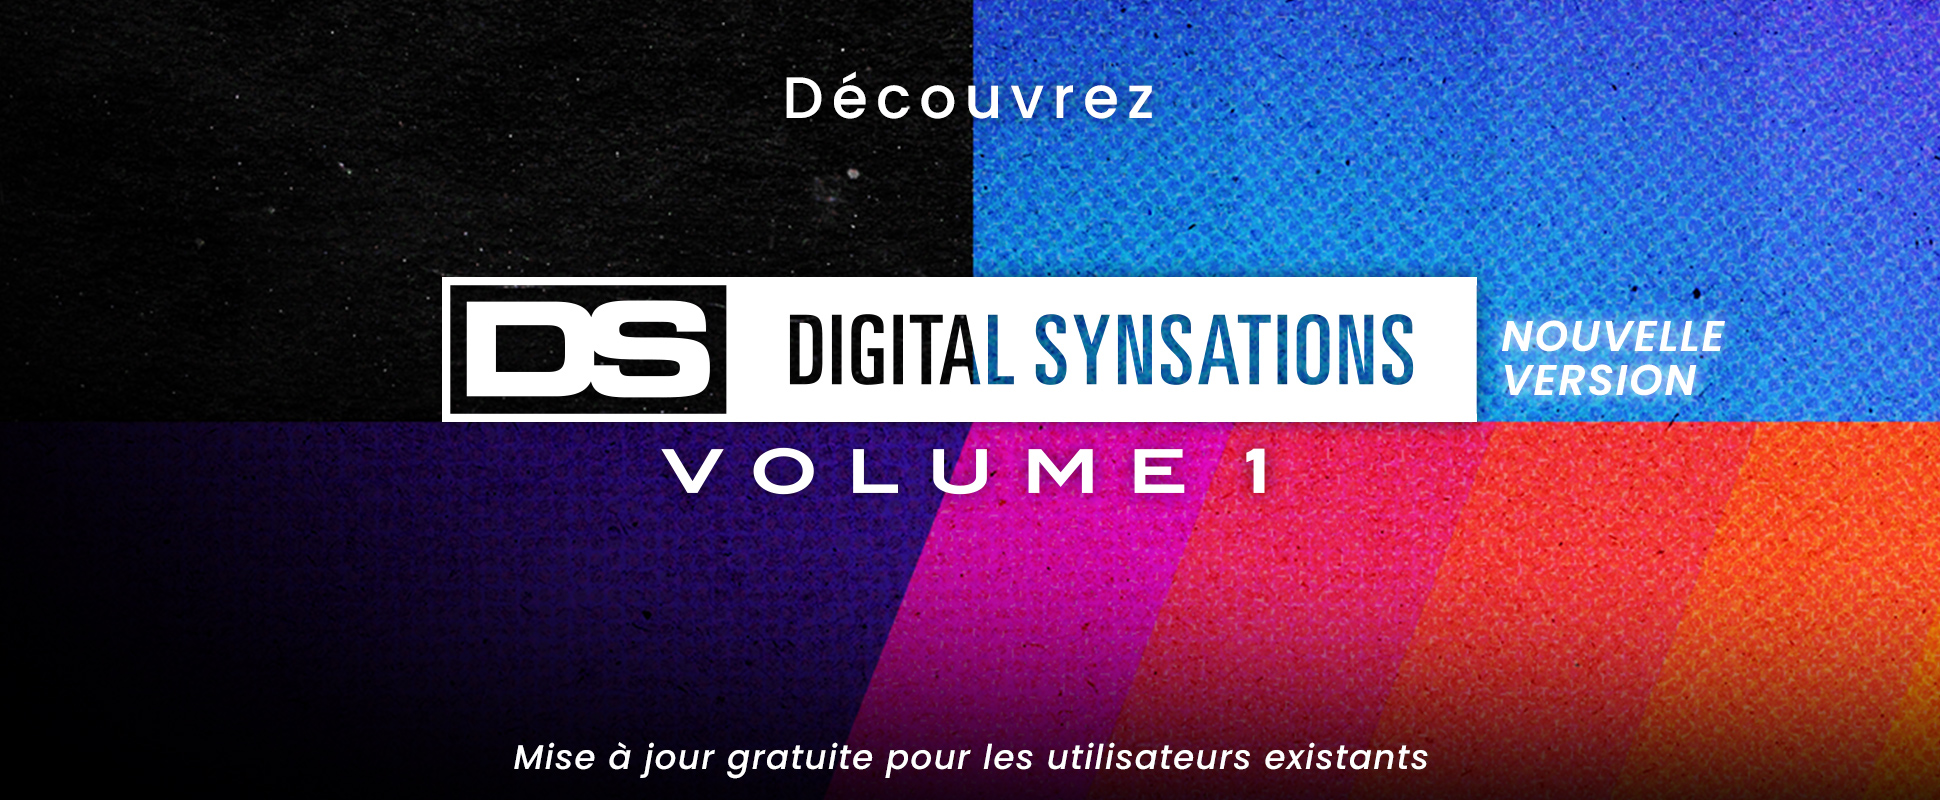 Digital Synsations Vol.1 - New